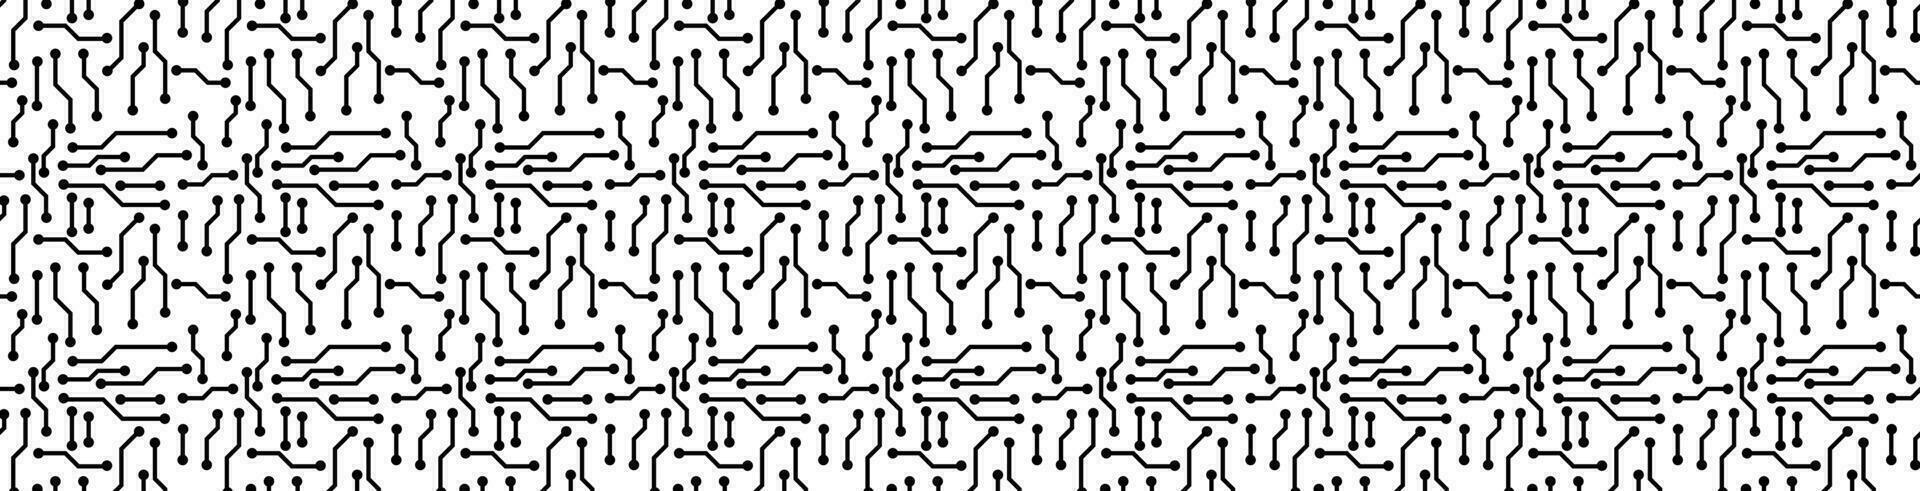 naadloos patroon van stroomkring bord vector